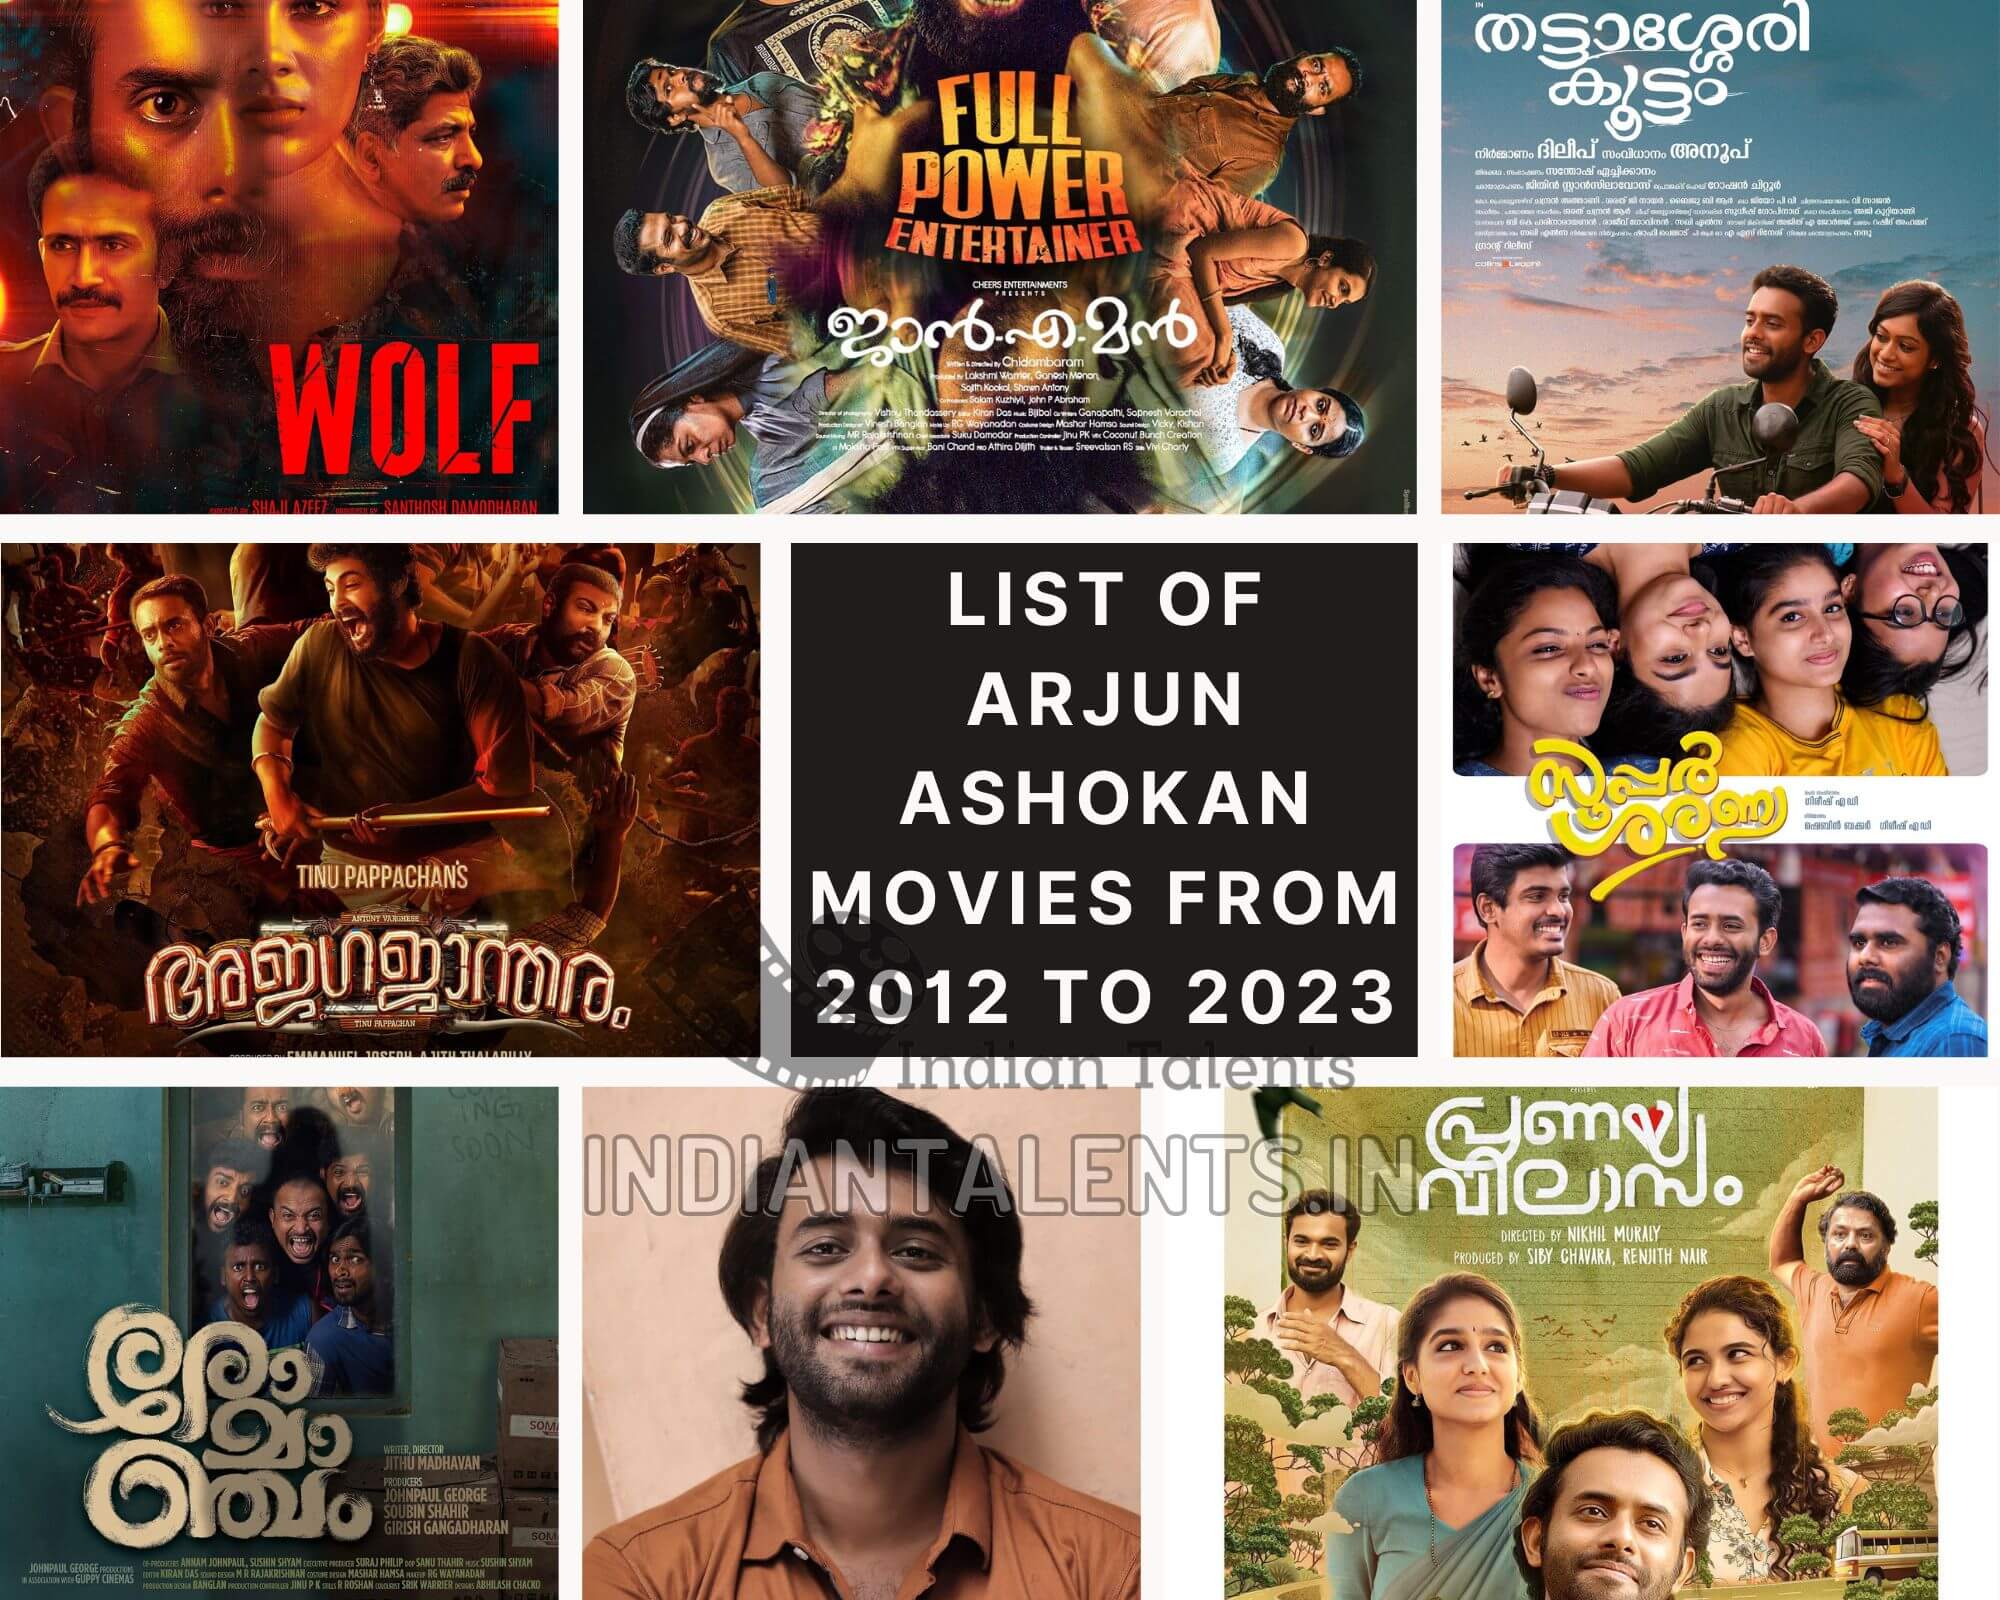 List of Arjun Ashokan Movies from